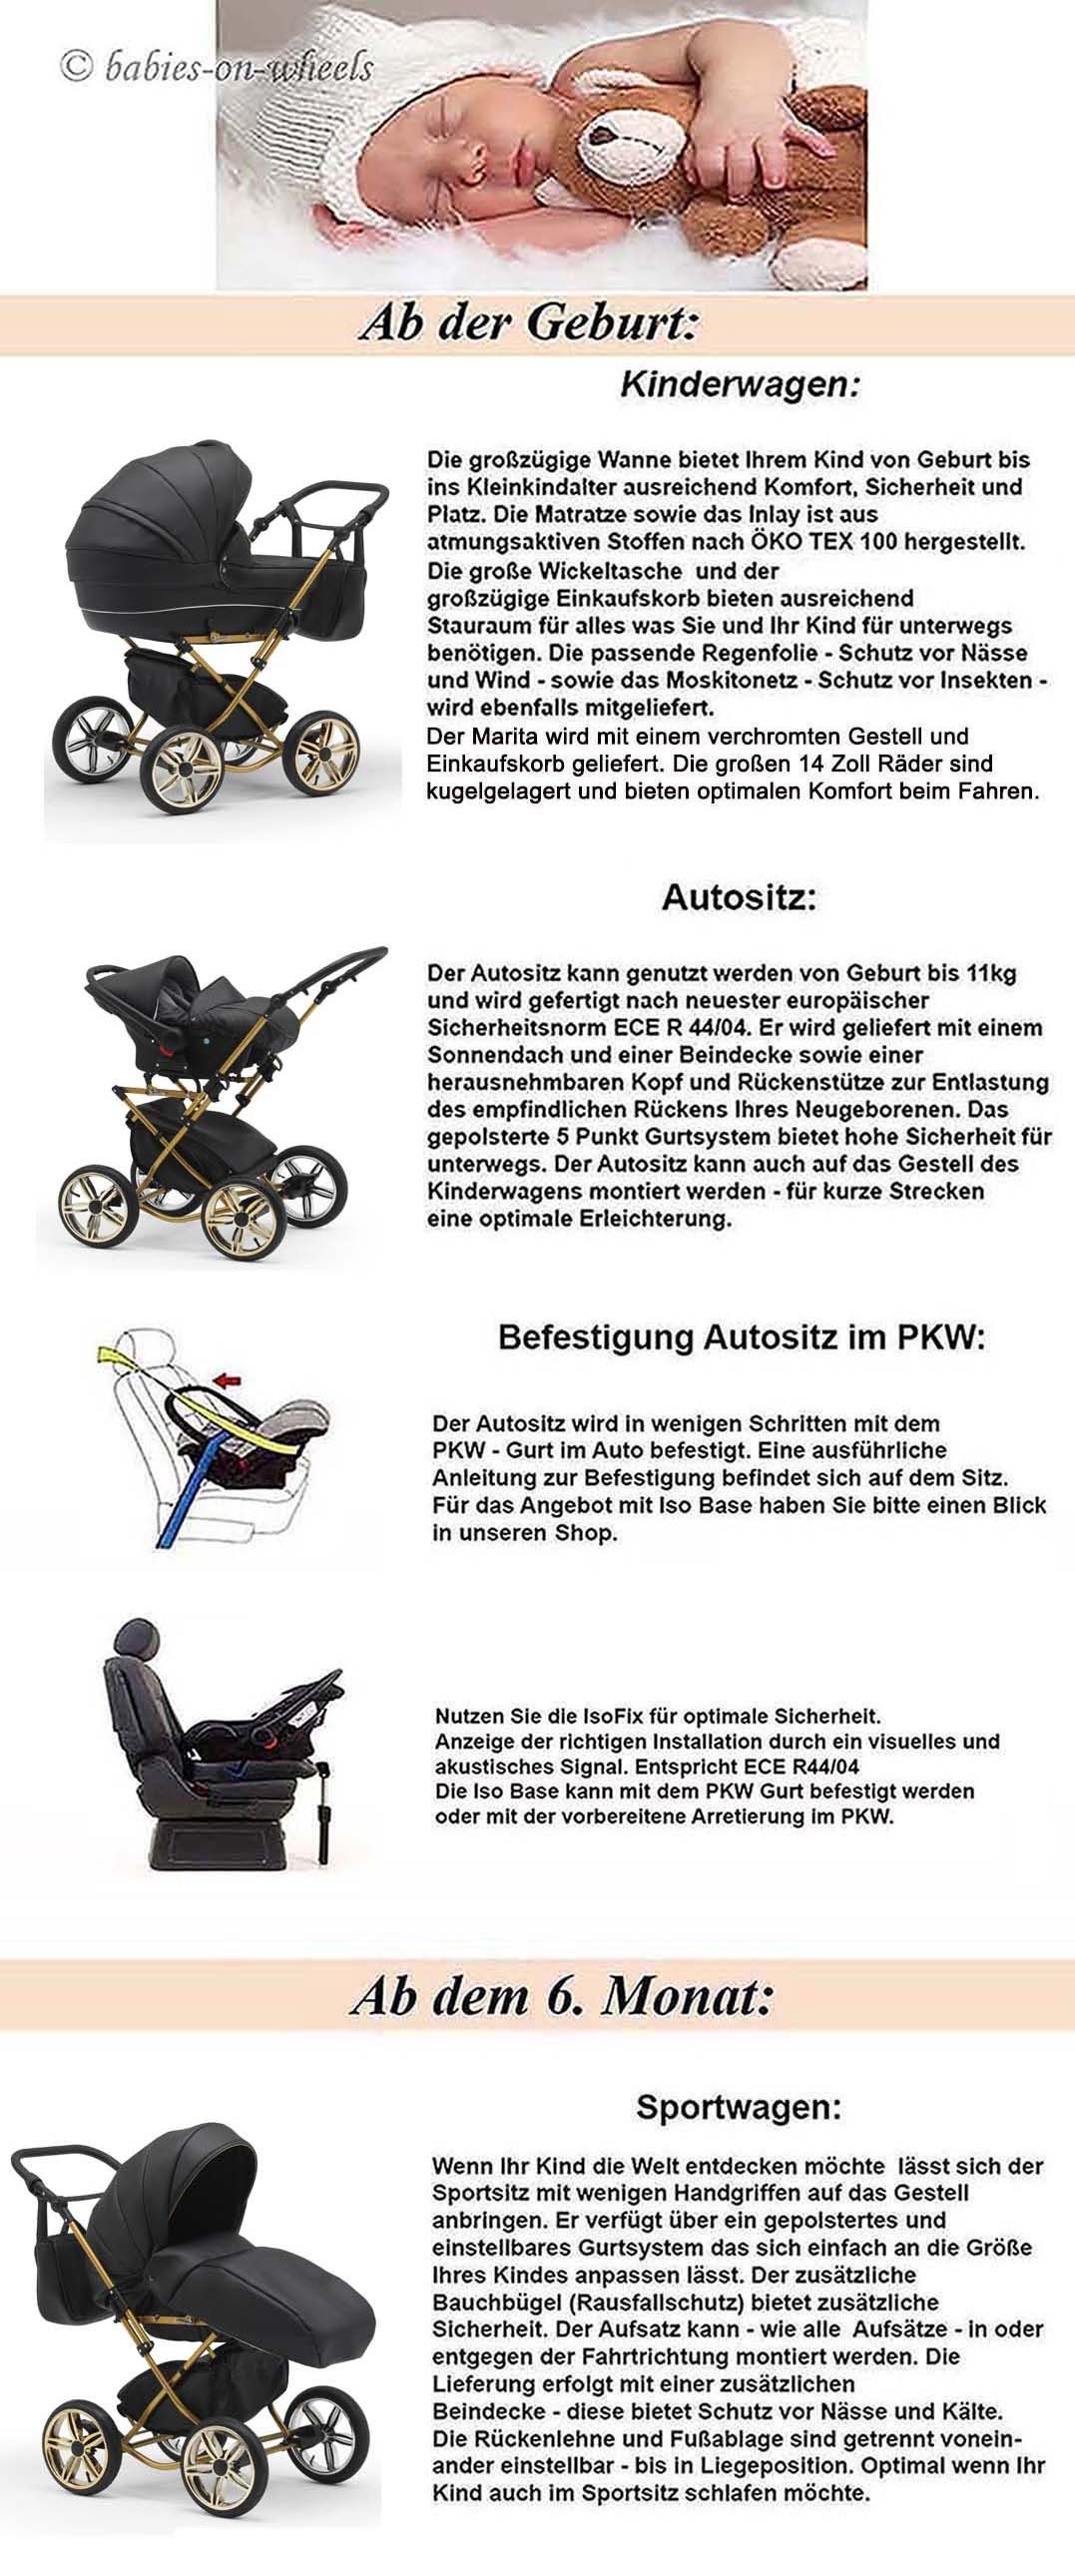 14 1 in - Sorento inkl. und in Autositz - Teile Designs babies-on-wheels 10 Base Iso Kombi-Kinderwagen Weiß-Bordeaux 4